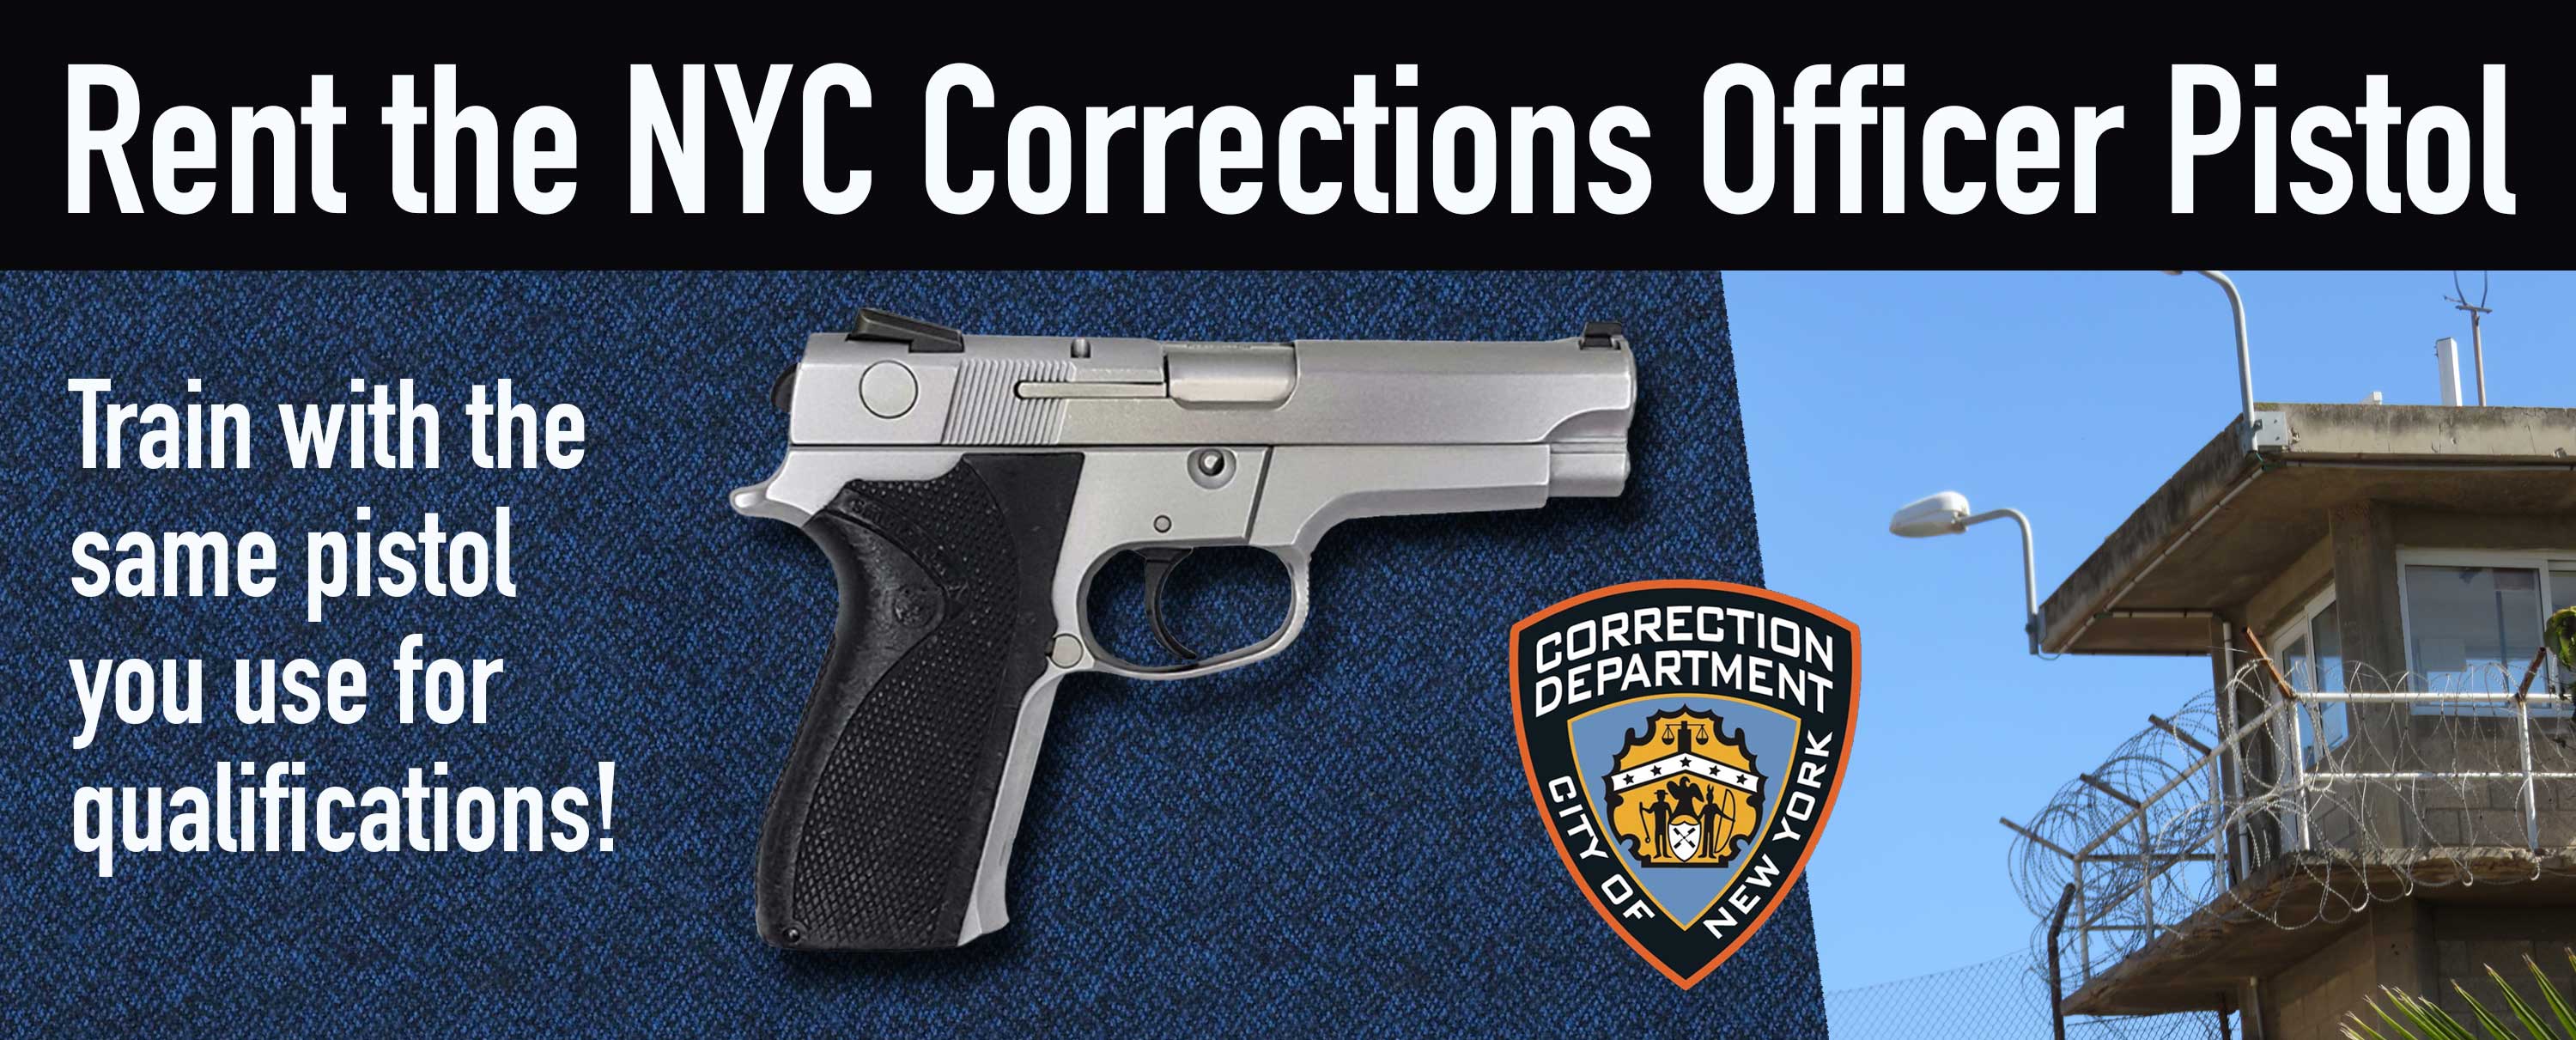 Corrections Officer Gun - NY Corrections Gun Rental